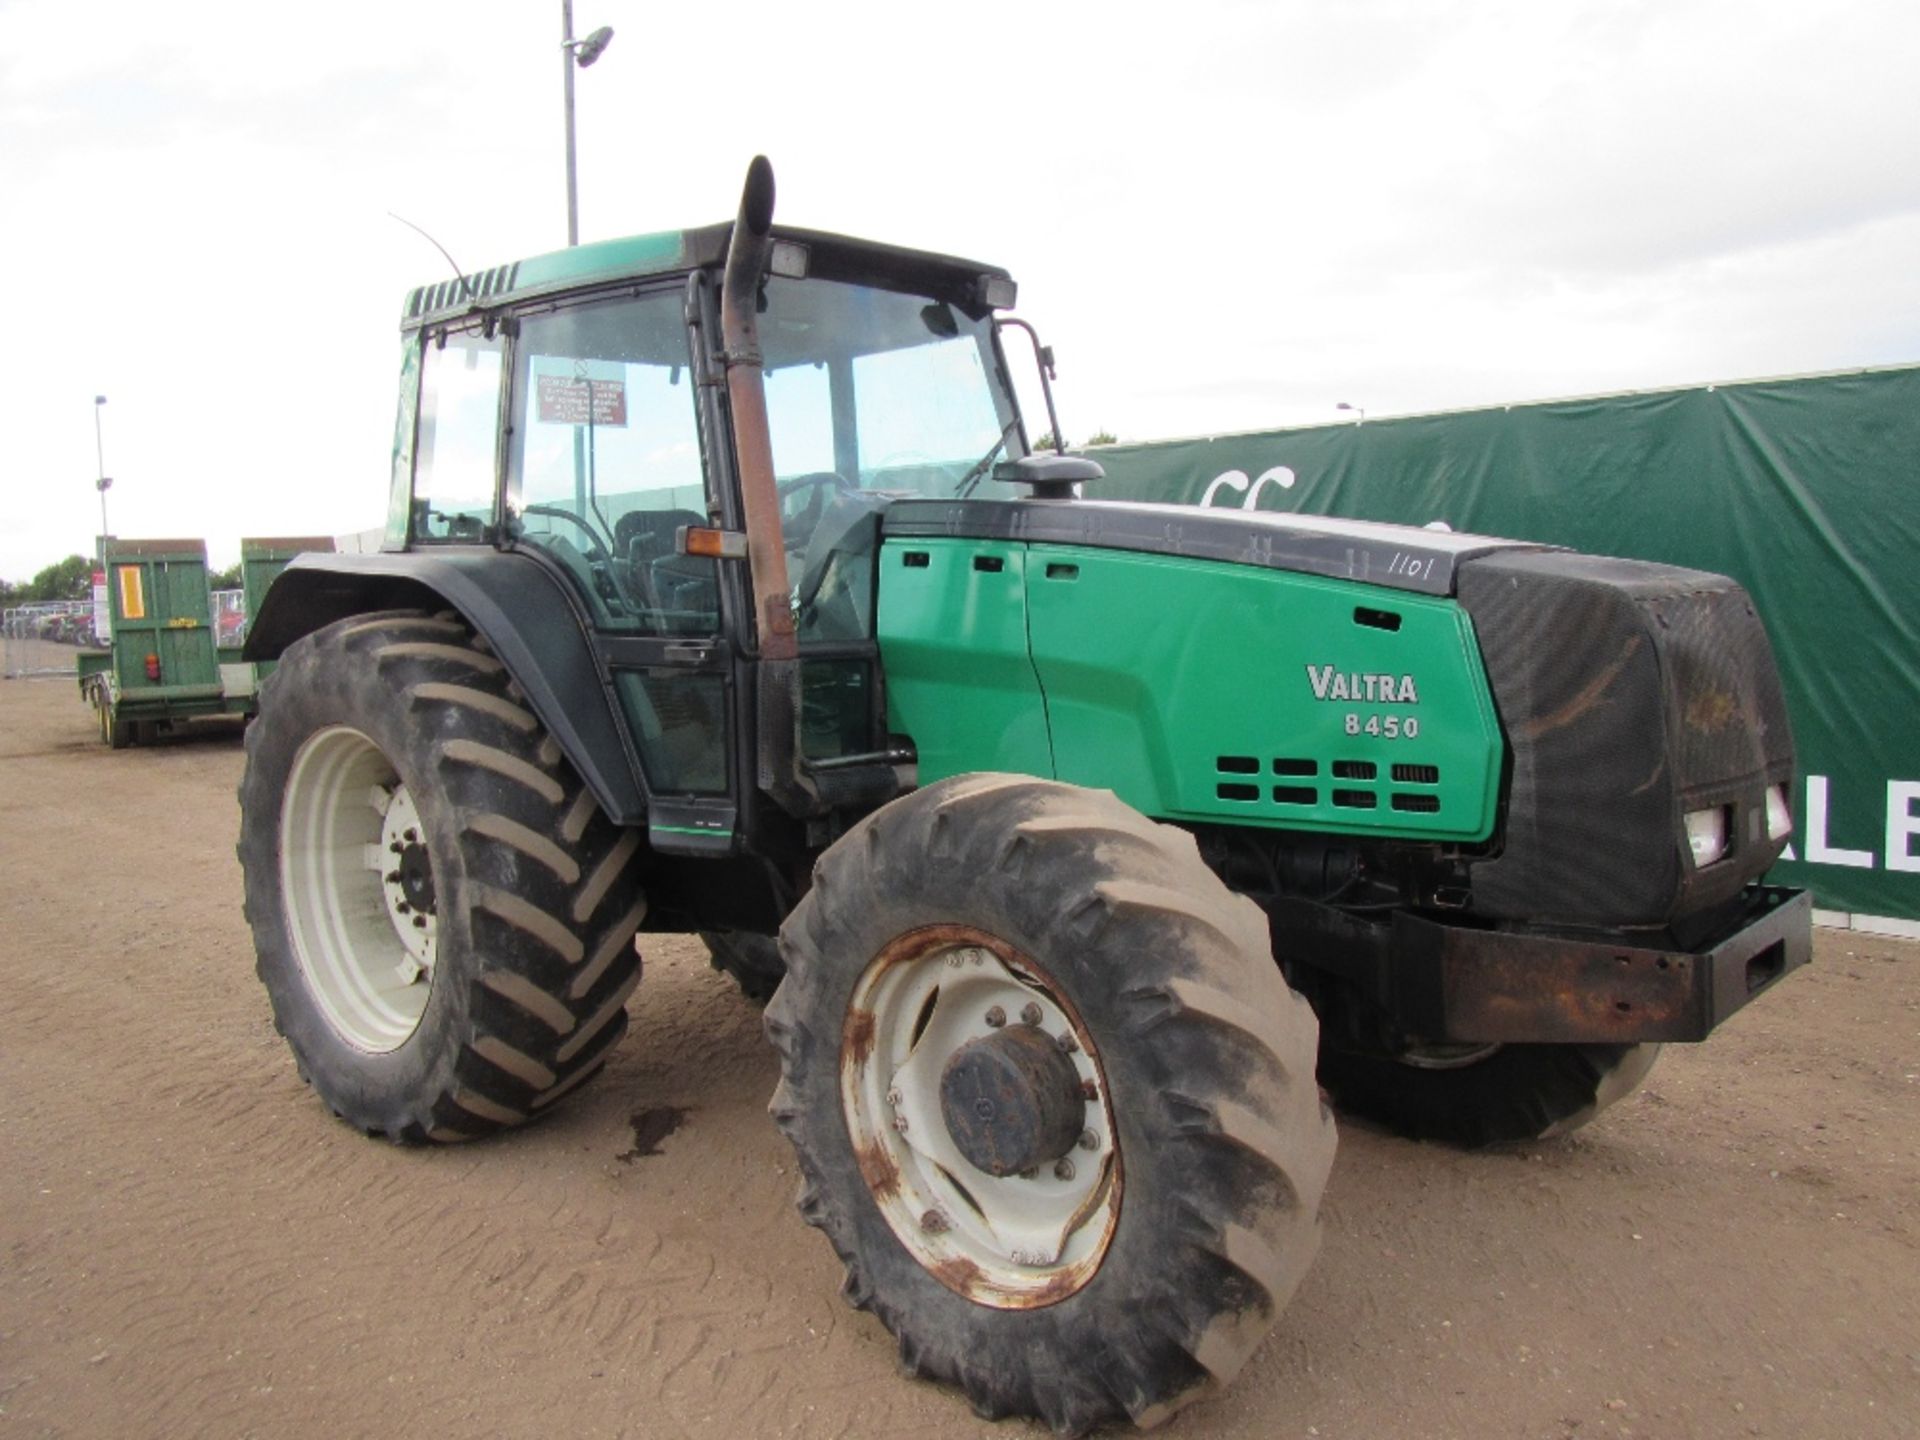 Valtra 8450 4wd 150hp Tractor Reg. No. P461 HVN Ser No G07329 - Image 3 of 16